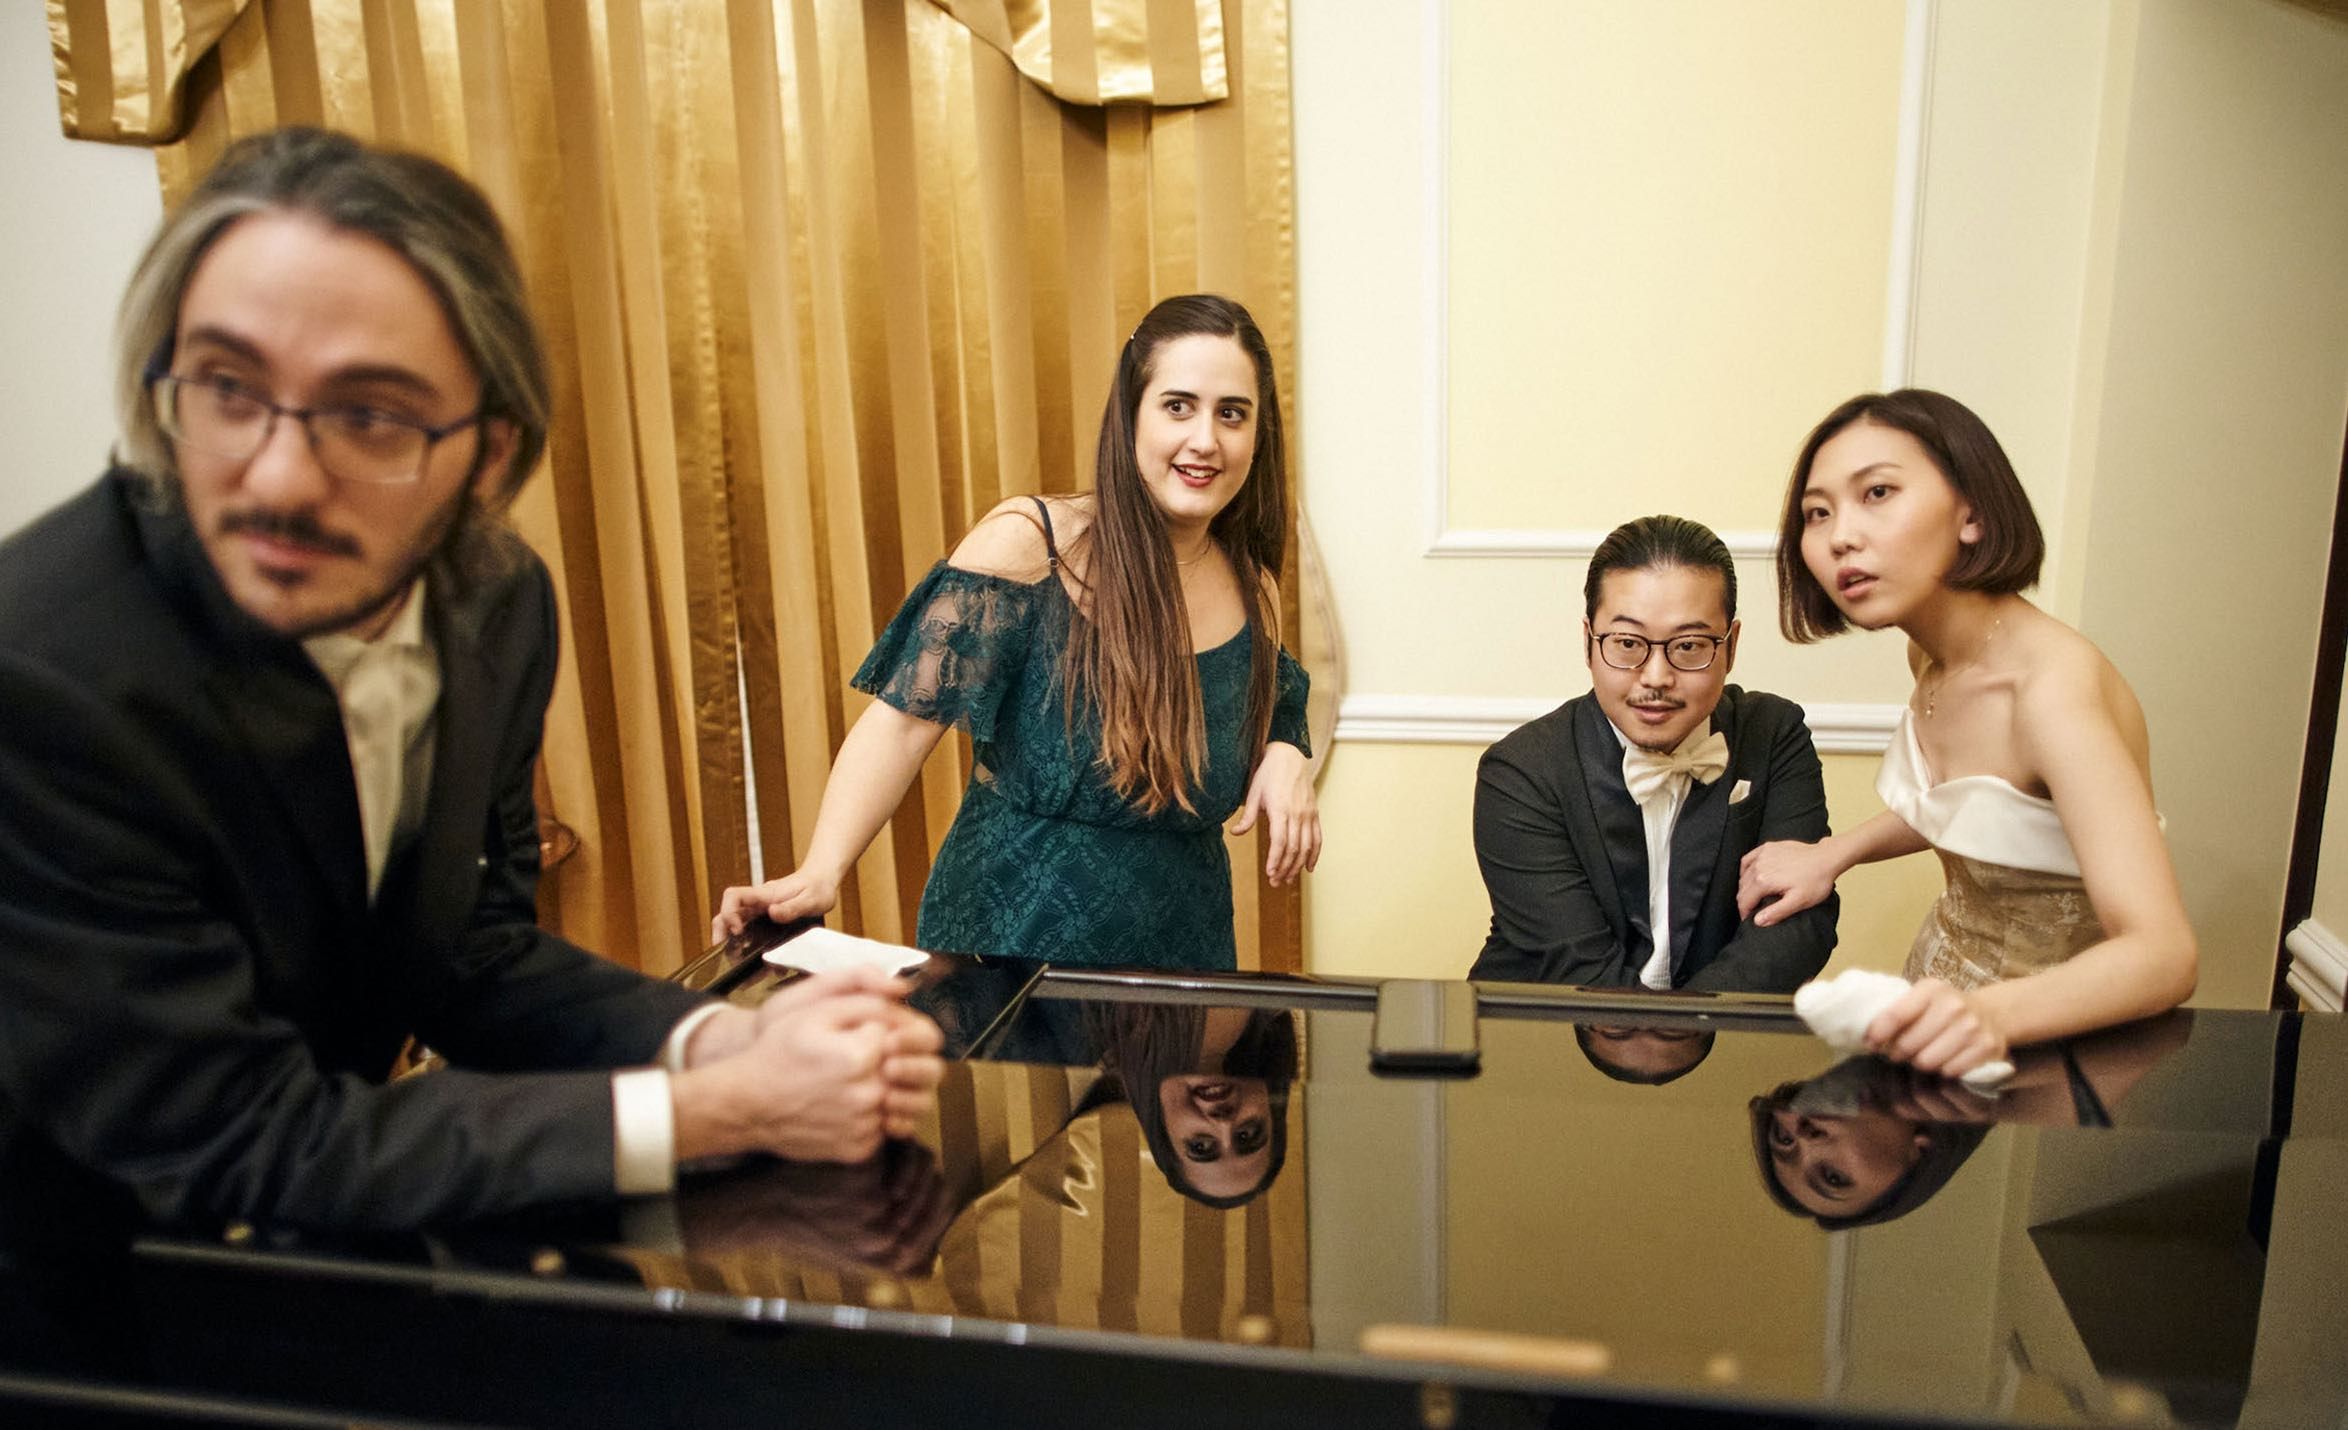 Friends and rivals: Gardjiev, Armellini, Sorita and Kobayashi face off in Pianoforte / Photo by Darek Golik, courtesy of Sundance Institute